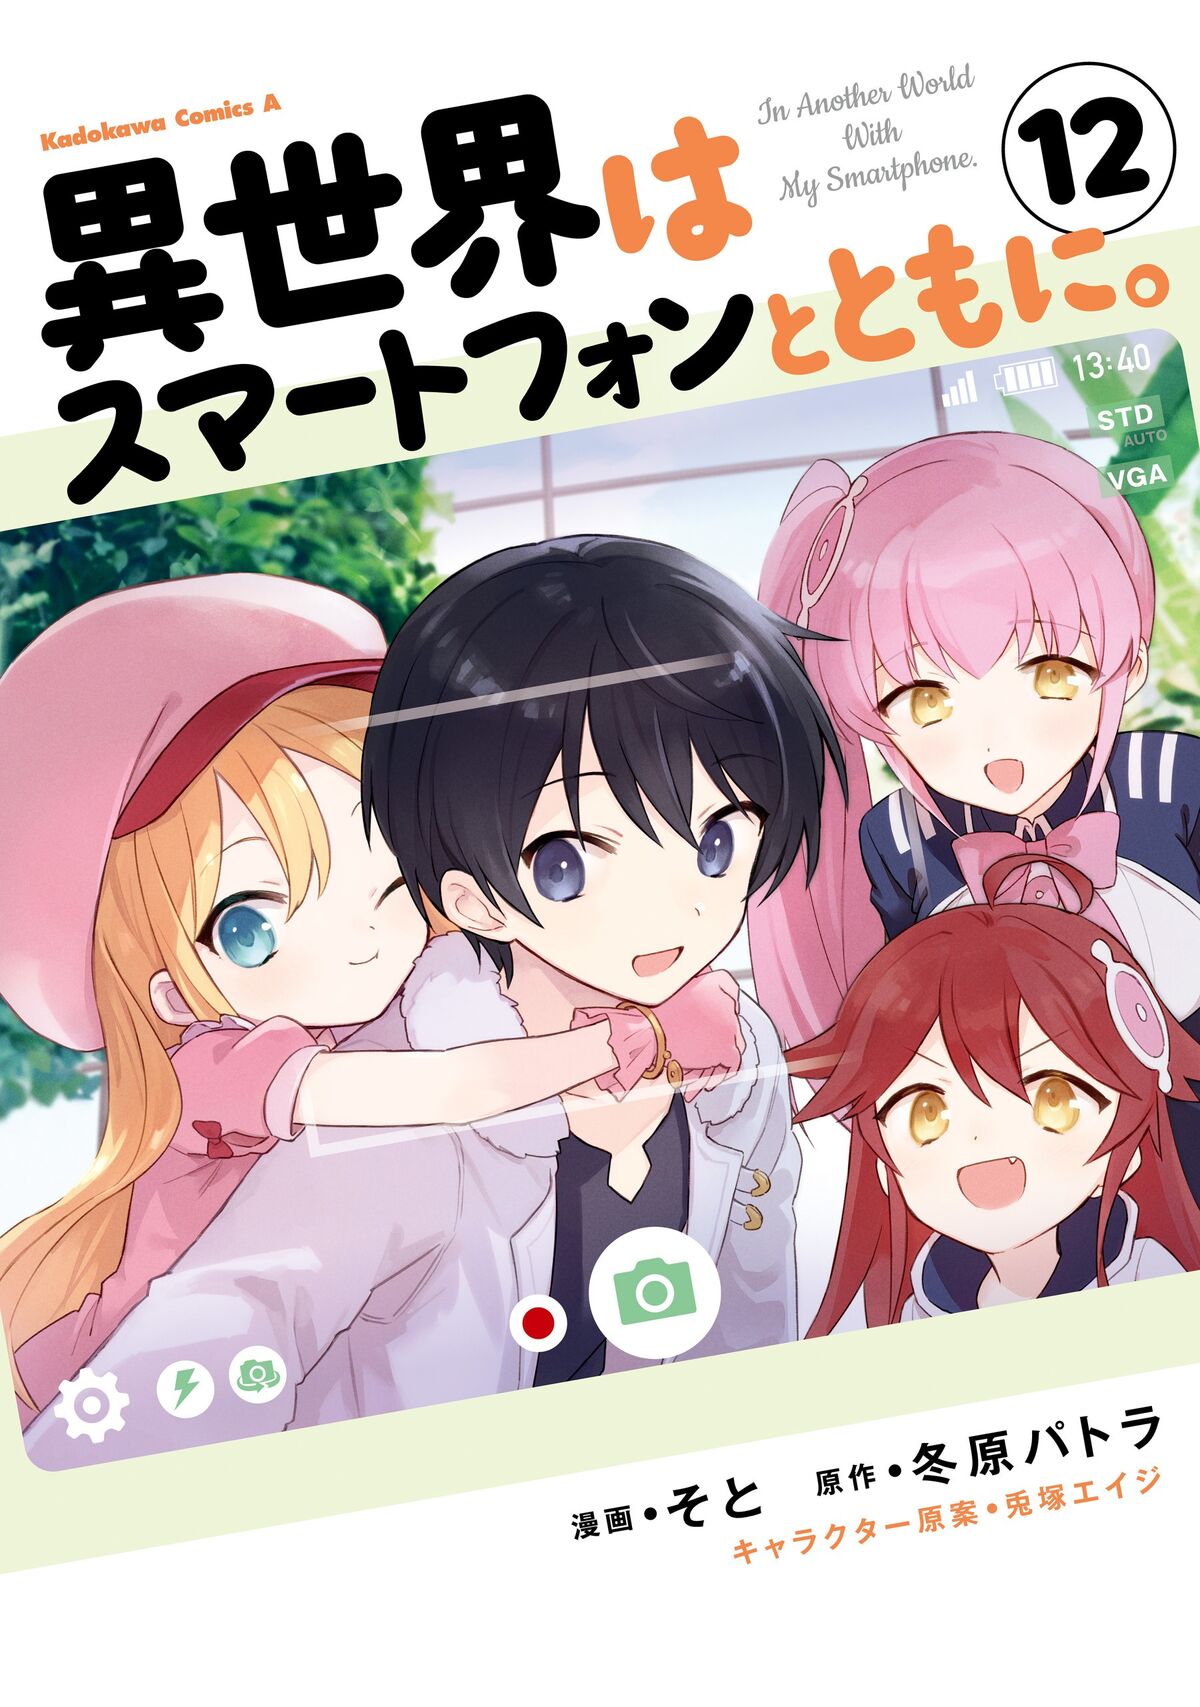 Manga Mogura RE on X: A 2nd Anime Season for In Another World With My  Smartphone has just been announced (Isekai wa Smartphone to Tomo ni)  English LN release @jnovelclub English manga